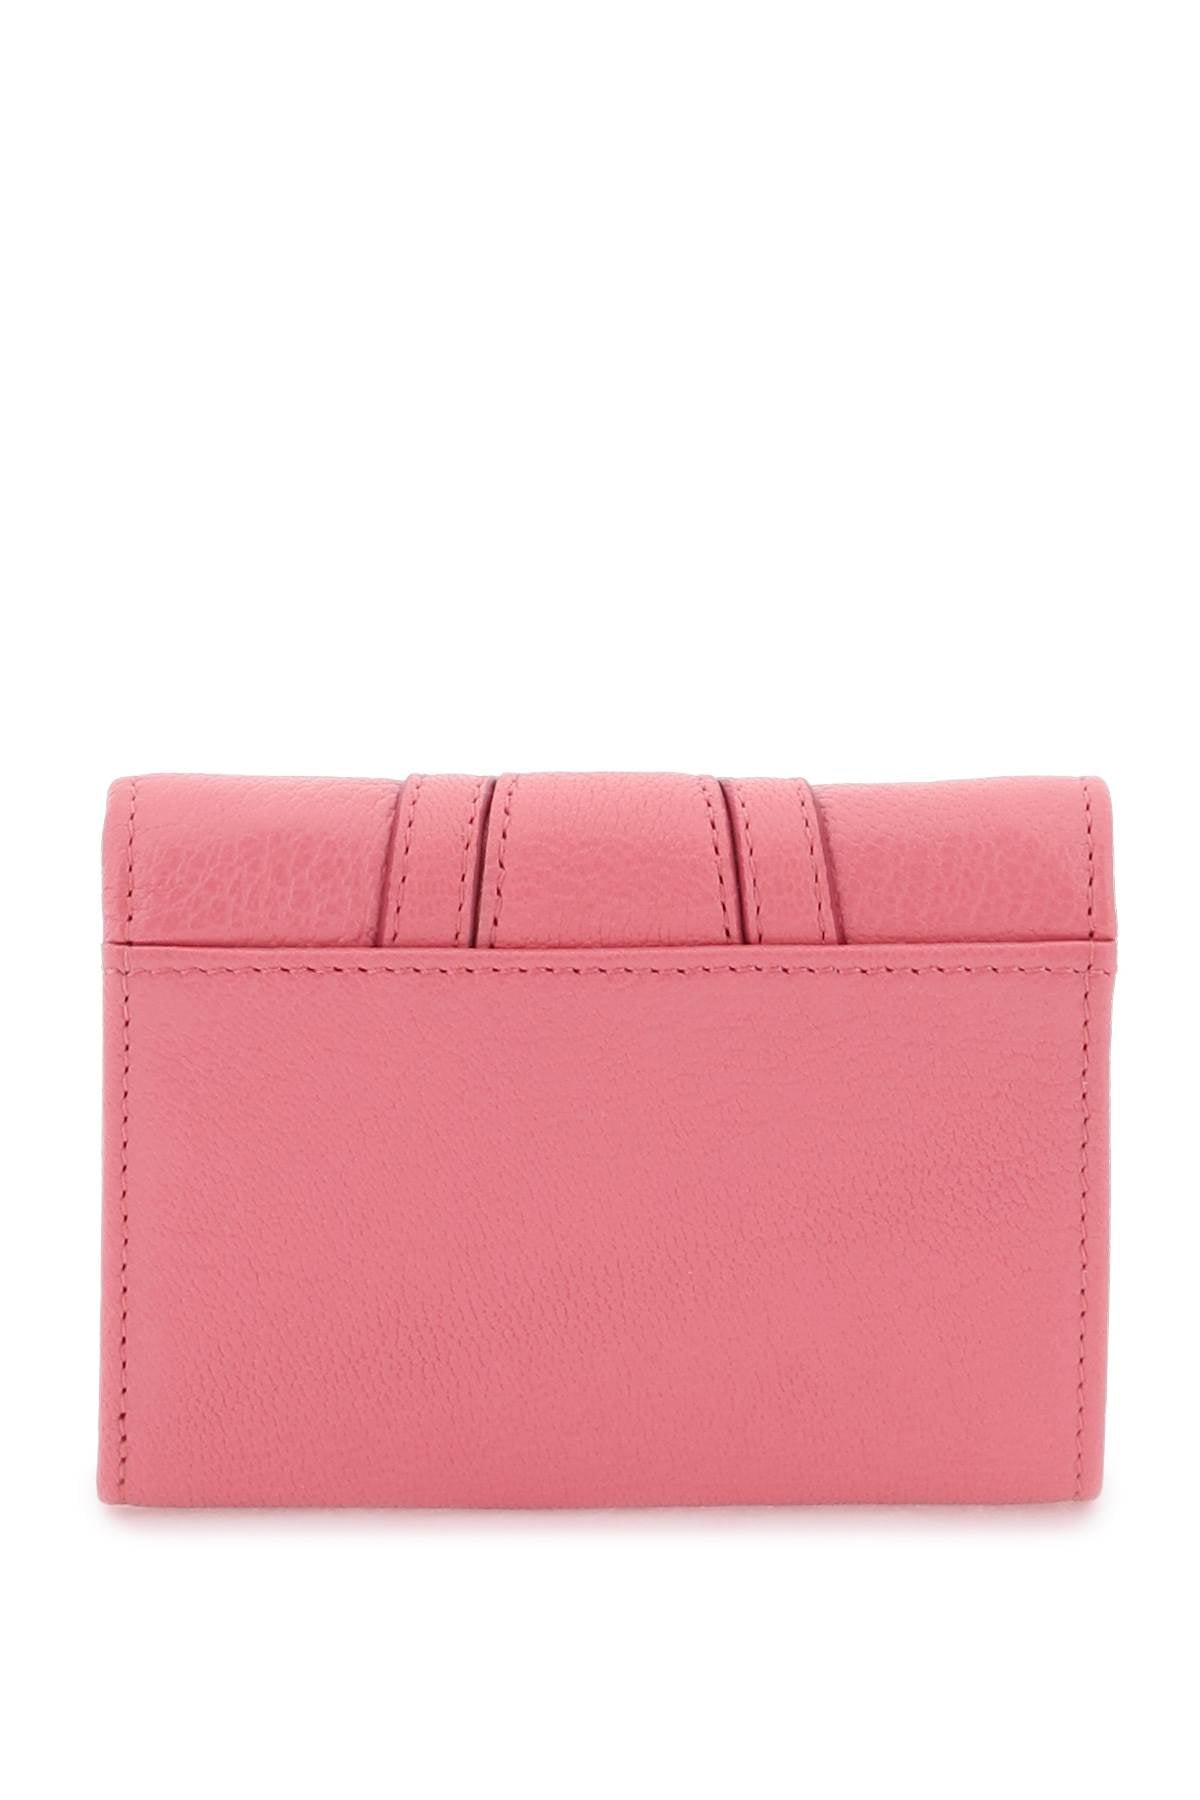 See By Chloe Hana Mini Wallet   Pink